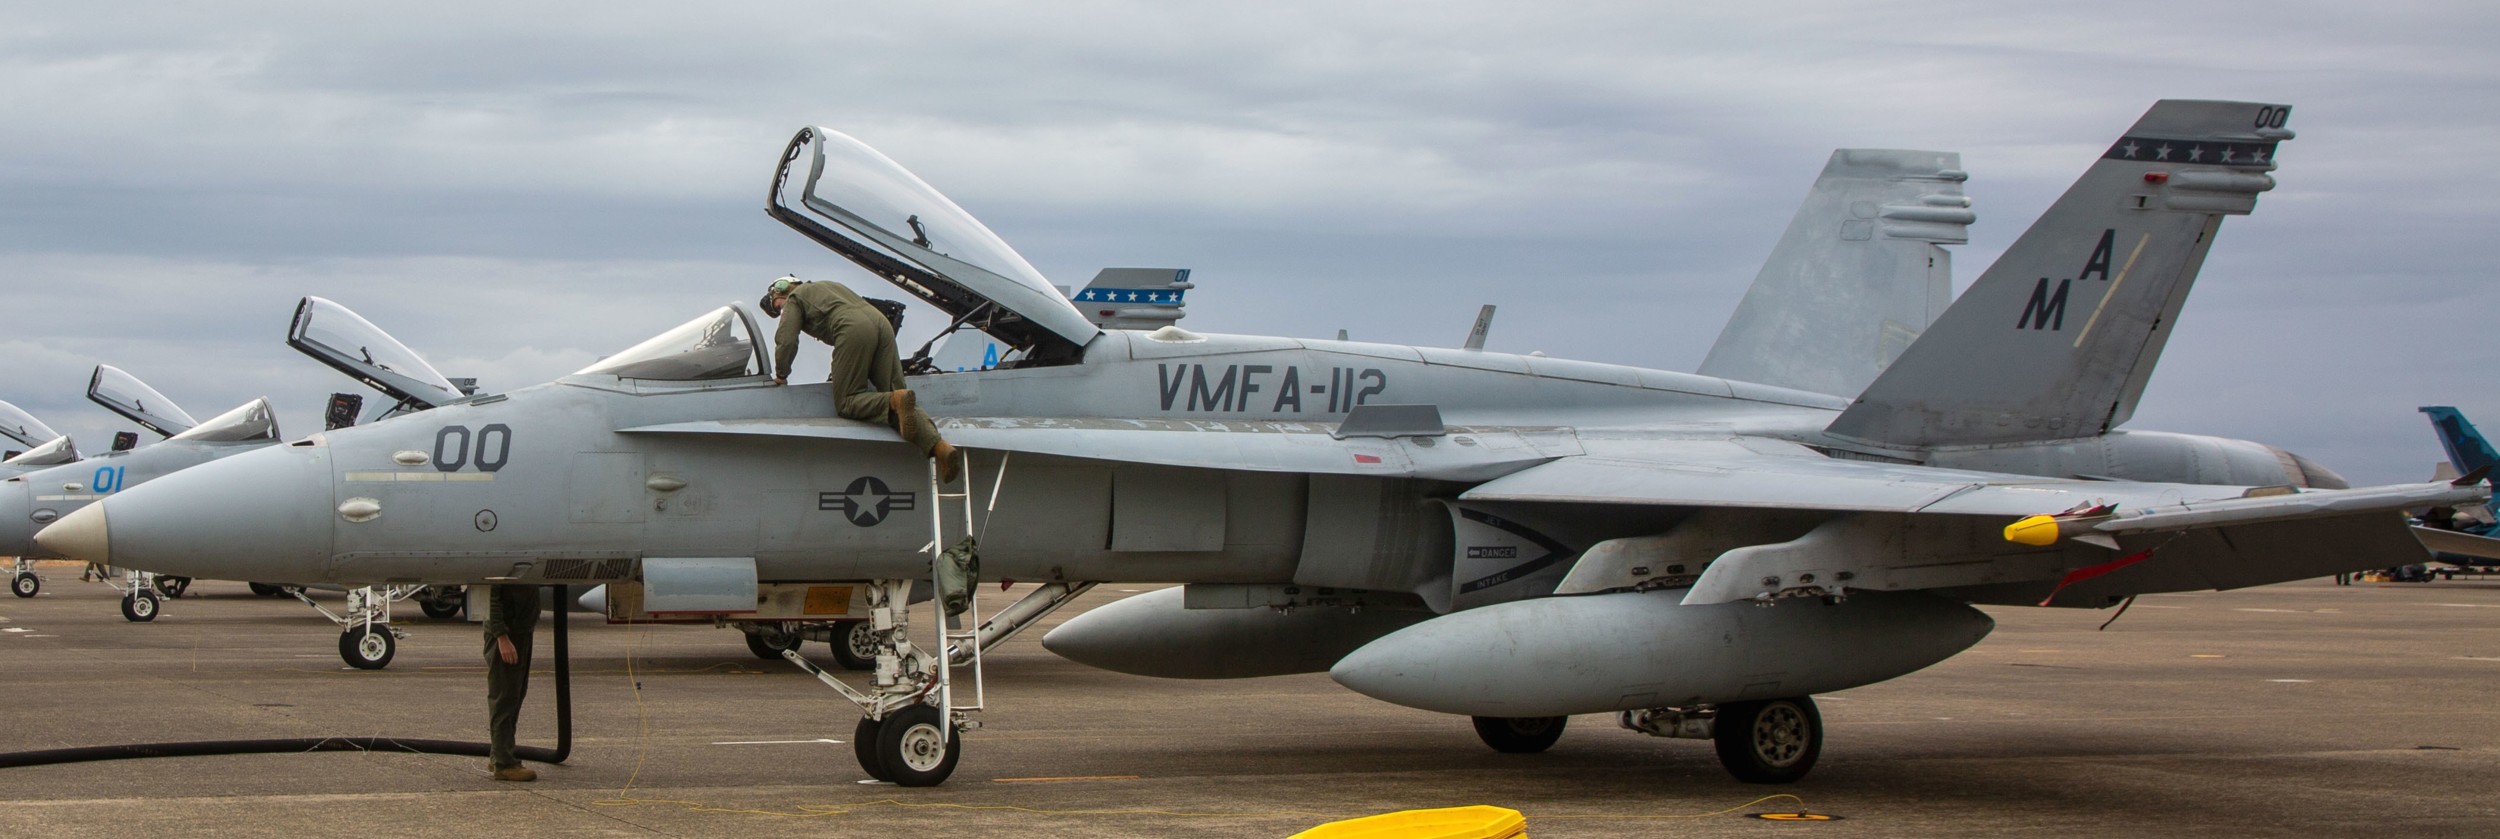 vmfa-112 cowboys marine fighter attack squadron usmc f/a-18c hornet 107